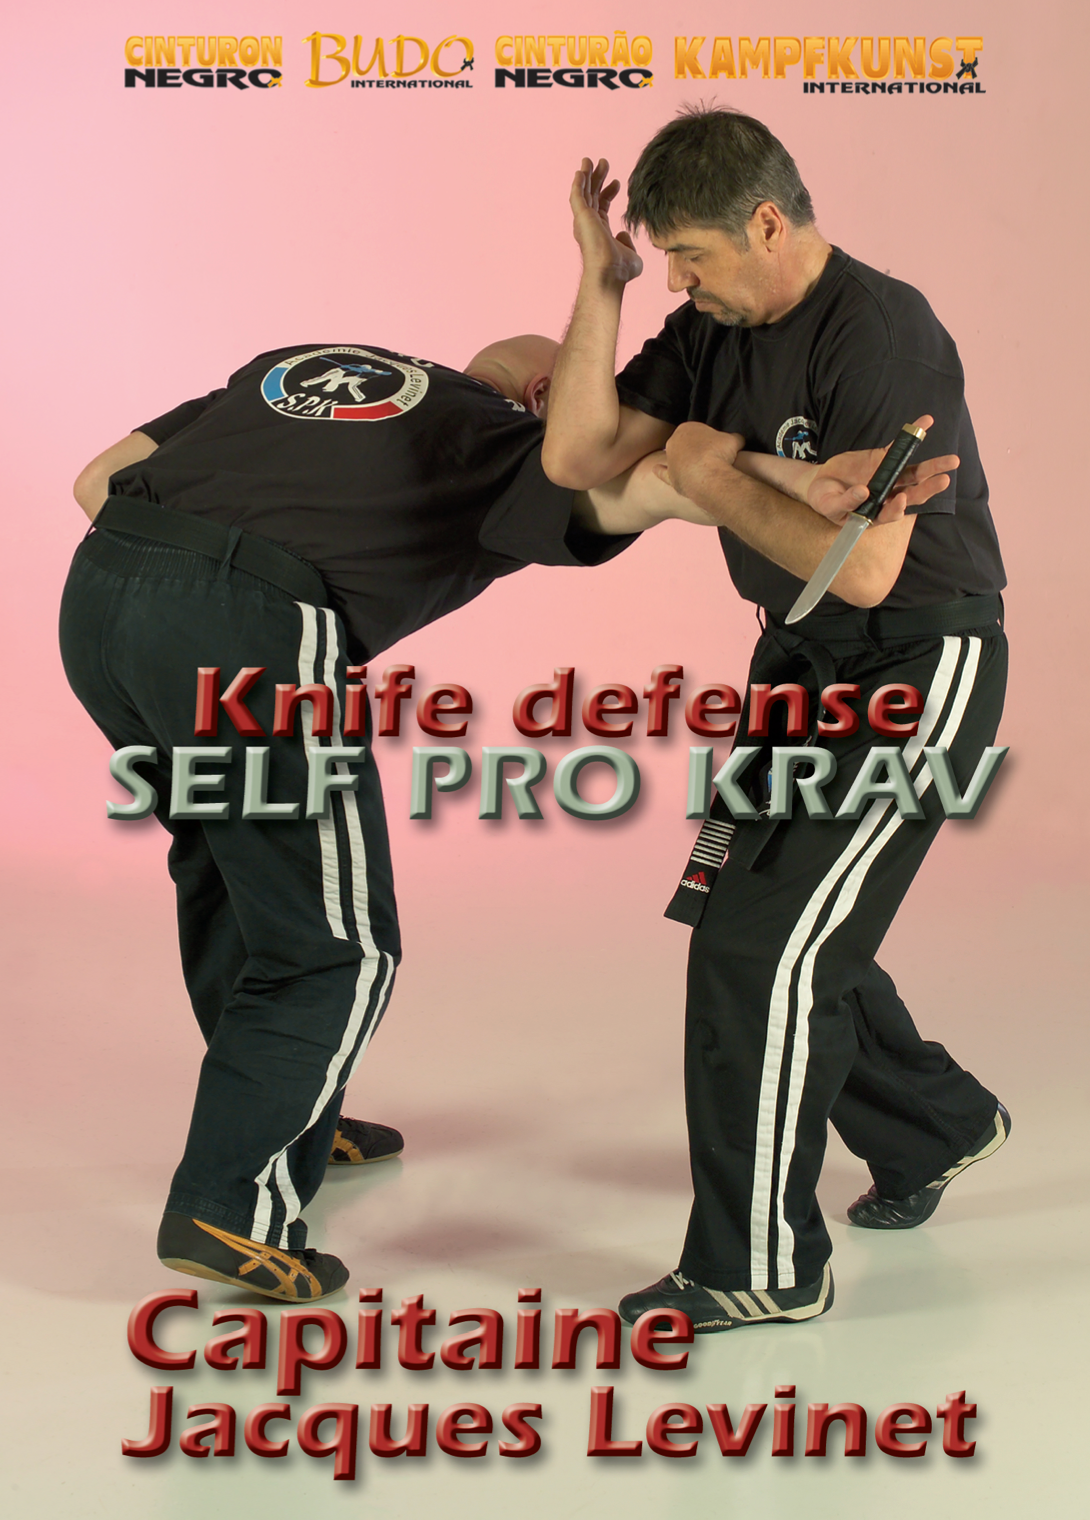 Self Pro Krav Knife Defense DVD with Jacques Levinet